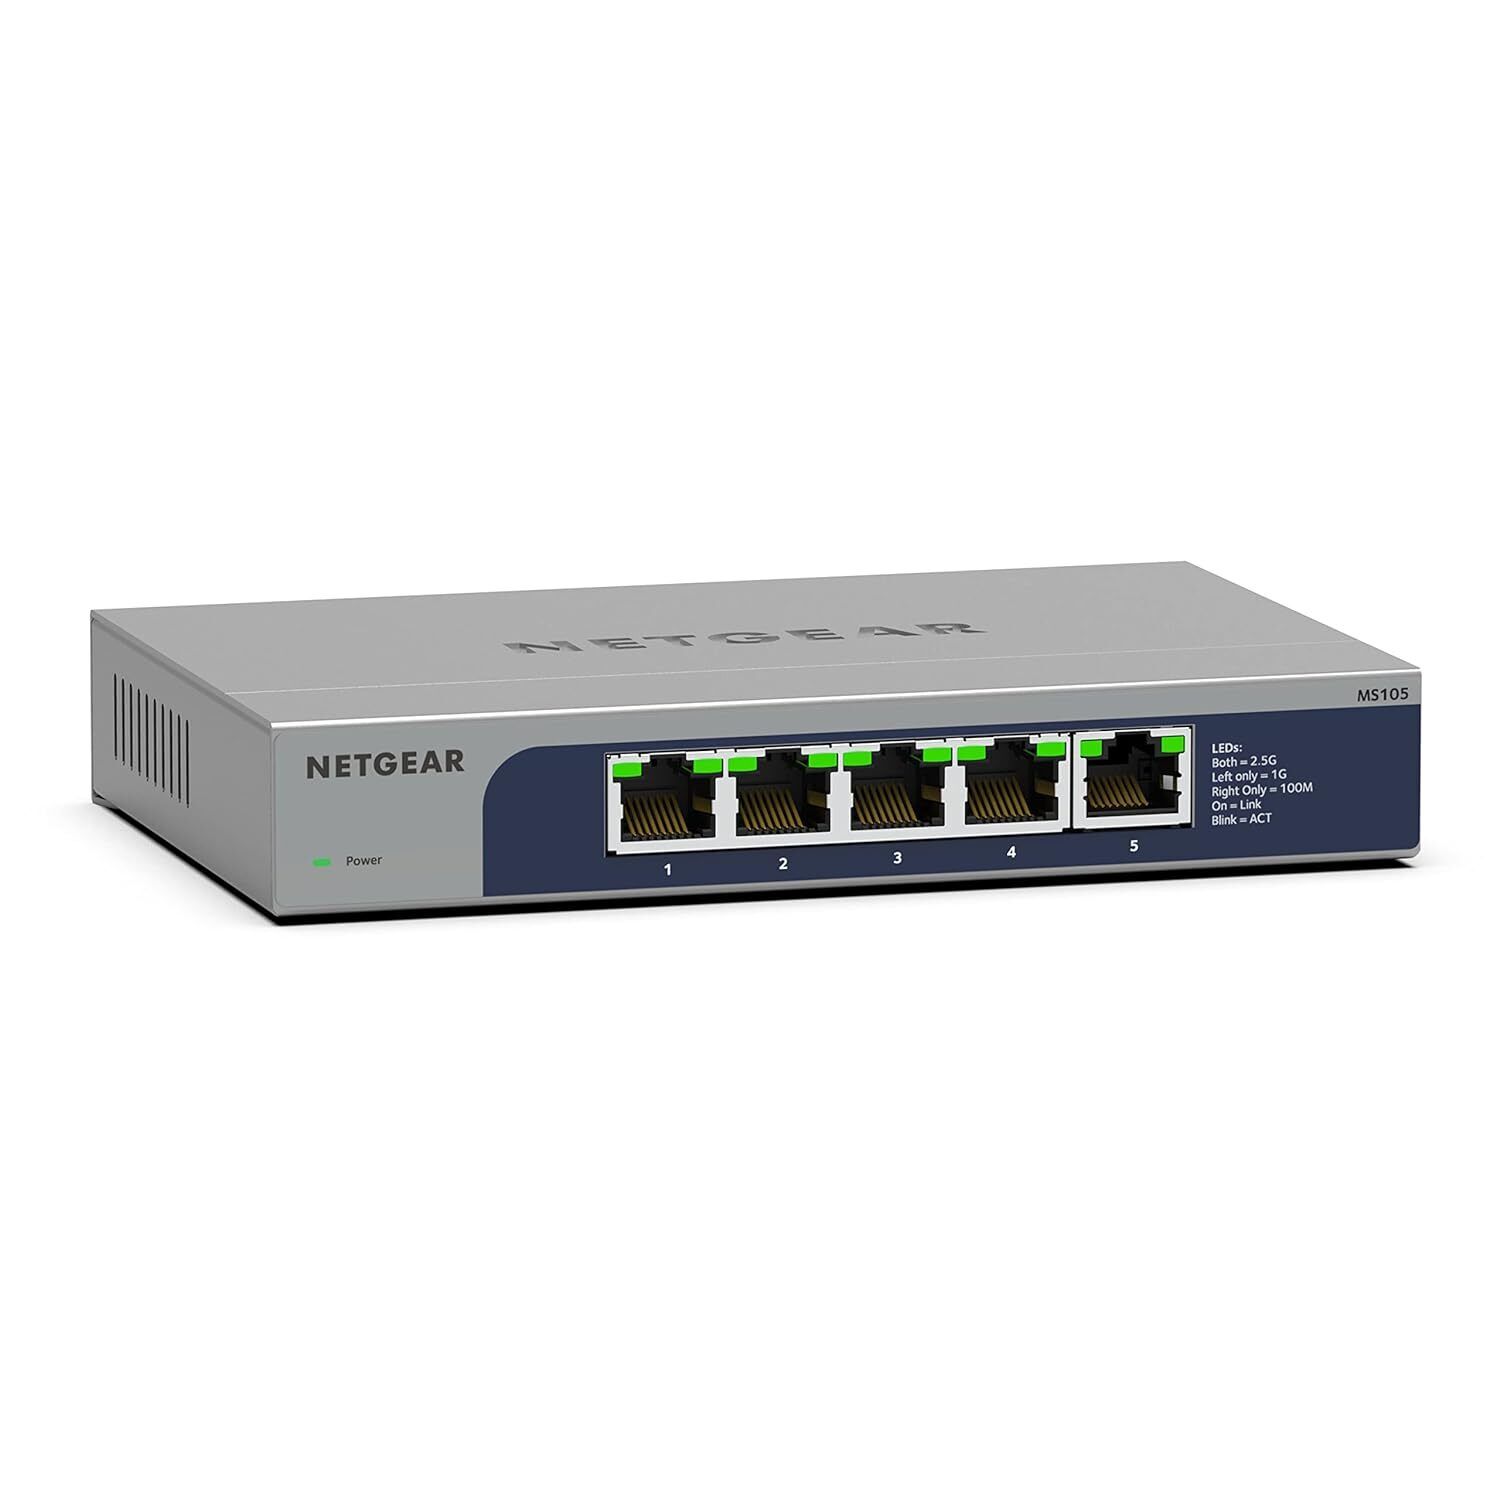 NETGEAR 5-Port Multi-Gigabit Ethernet Unmanaged Network Switch (MS105) - with